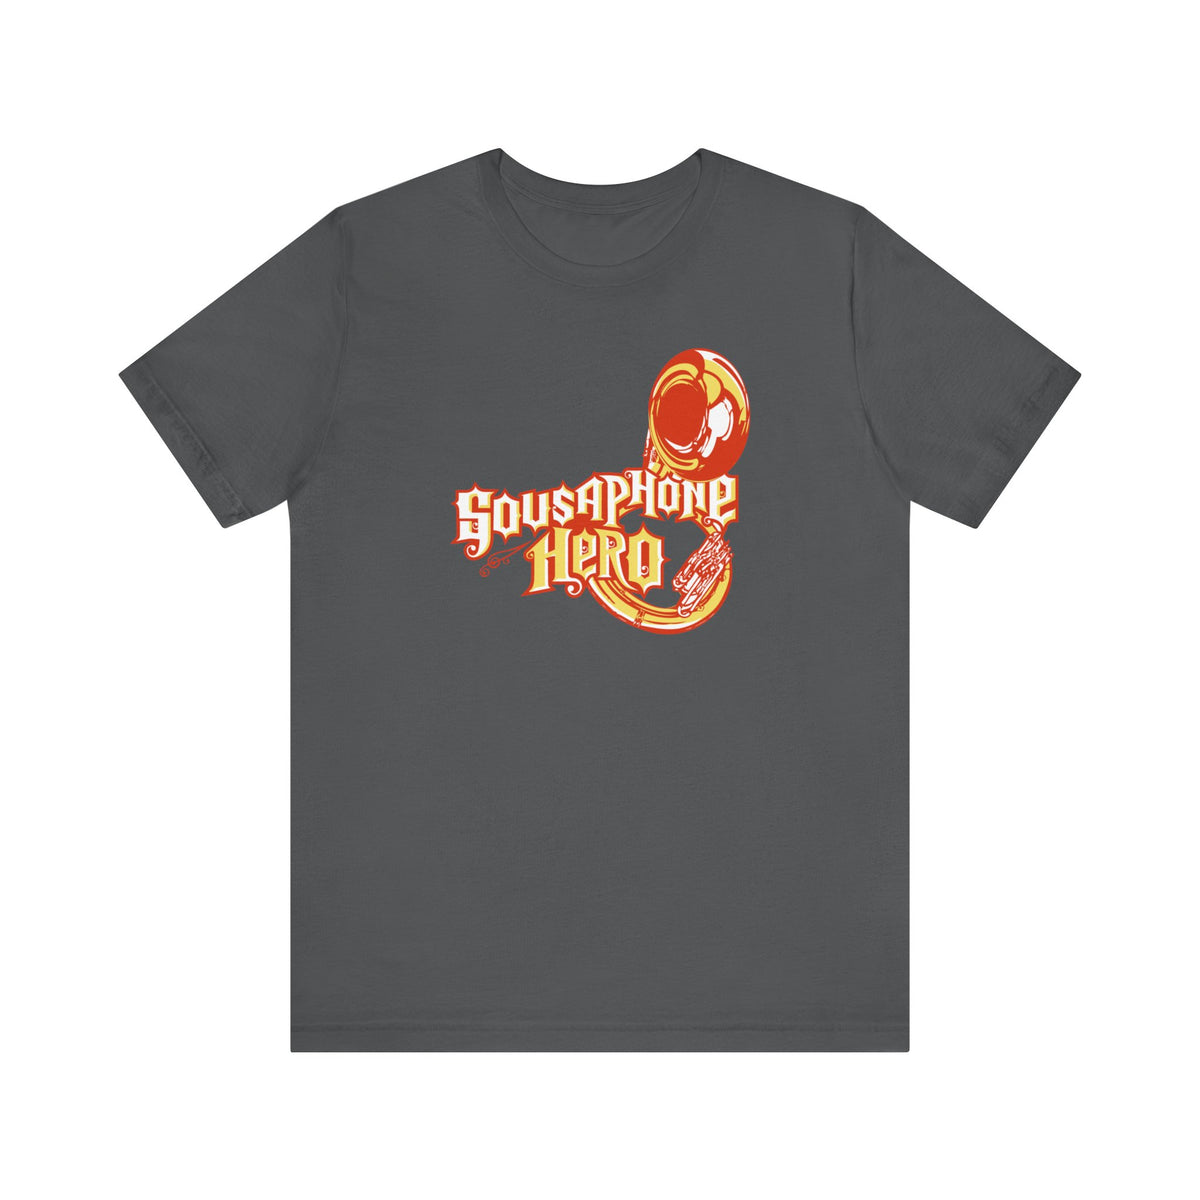 Sousaphone Hero - Men's T-Shirt